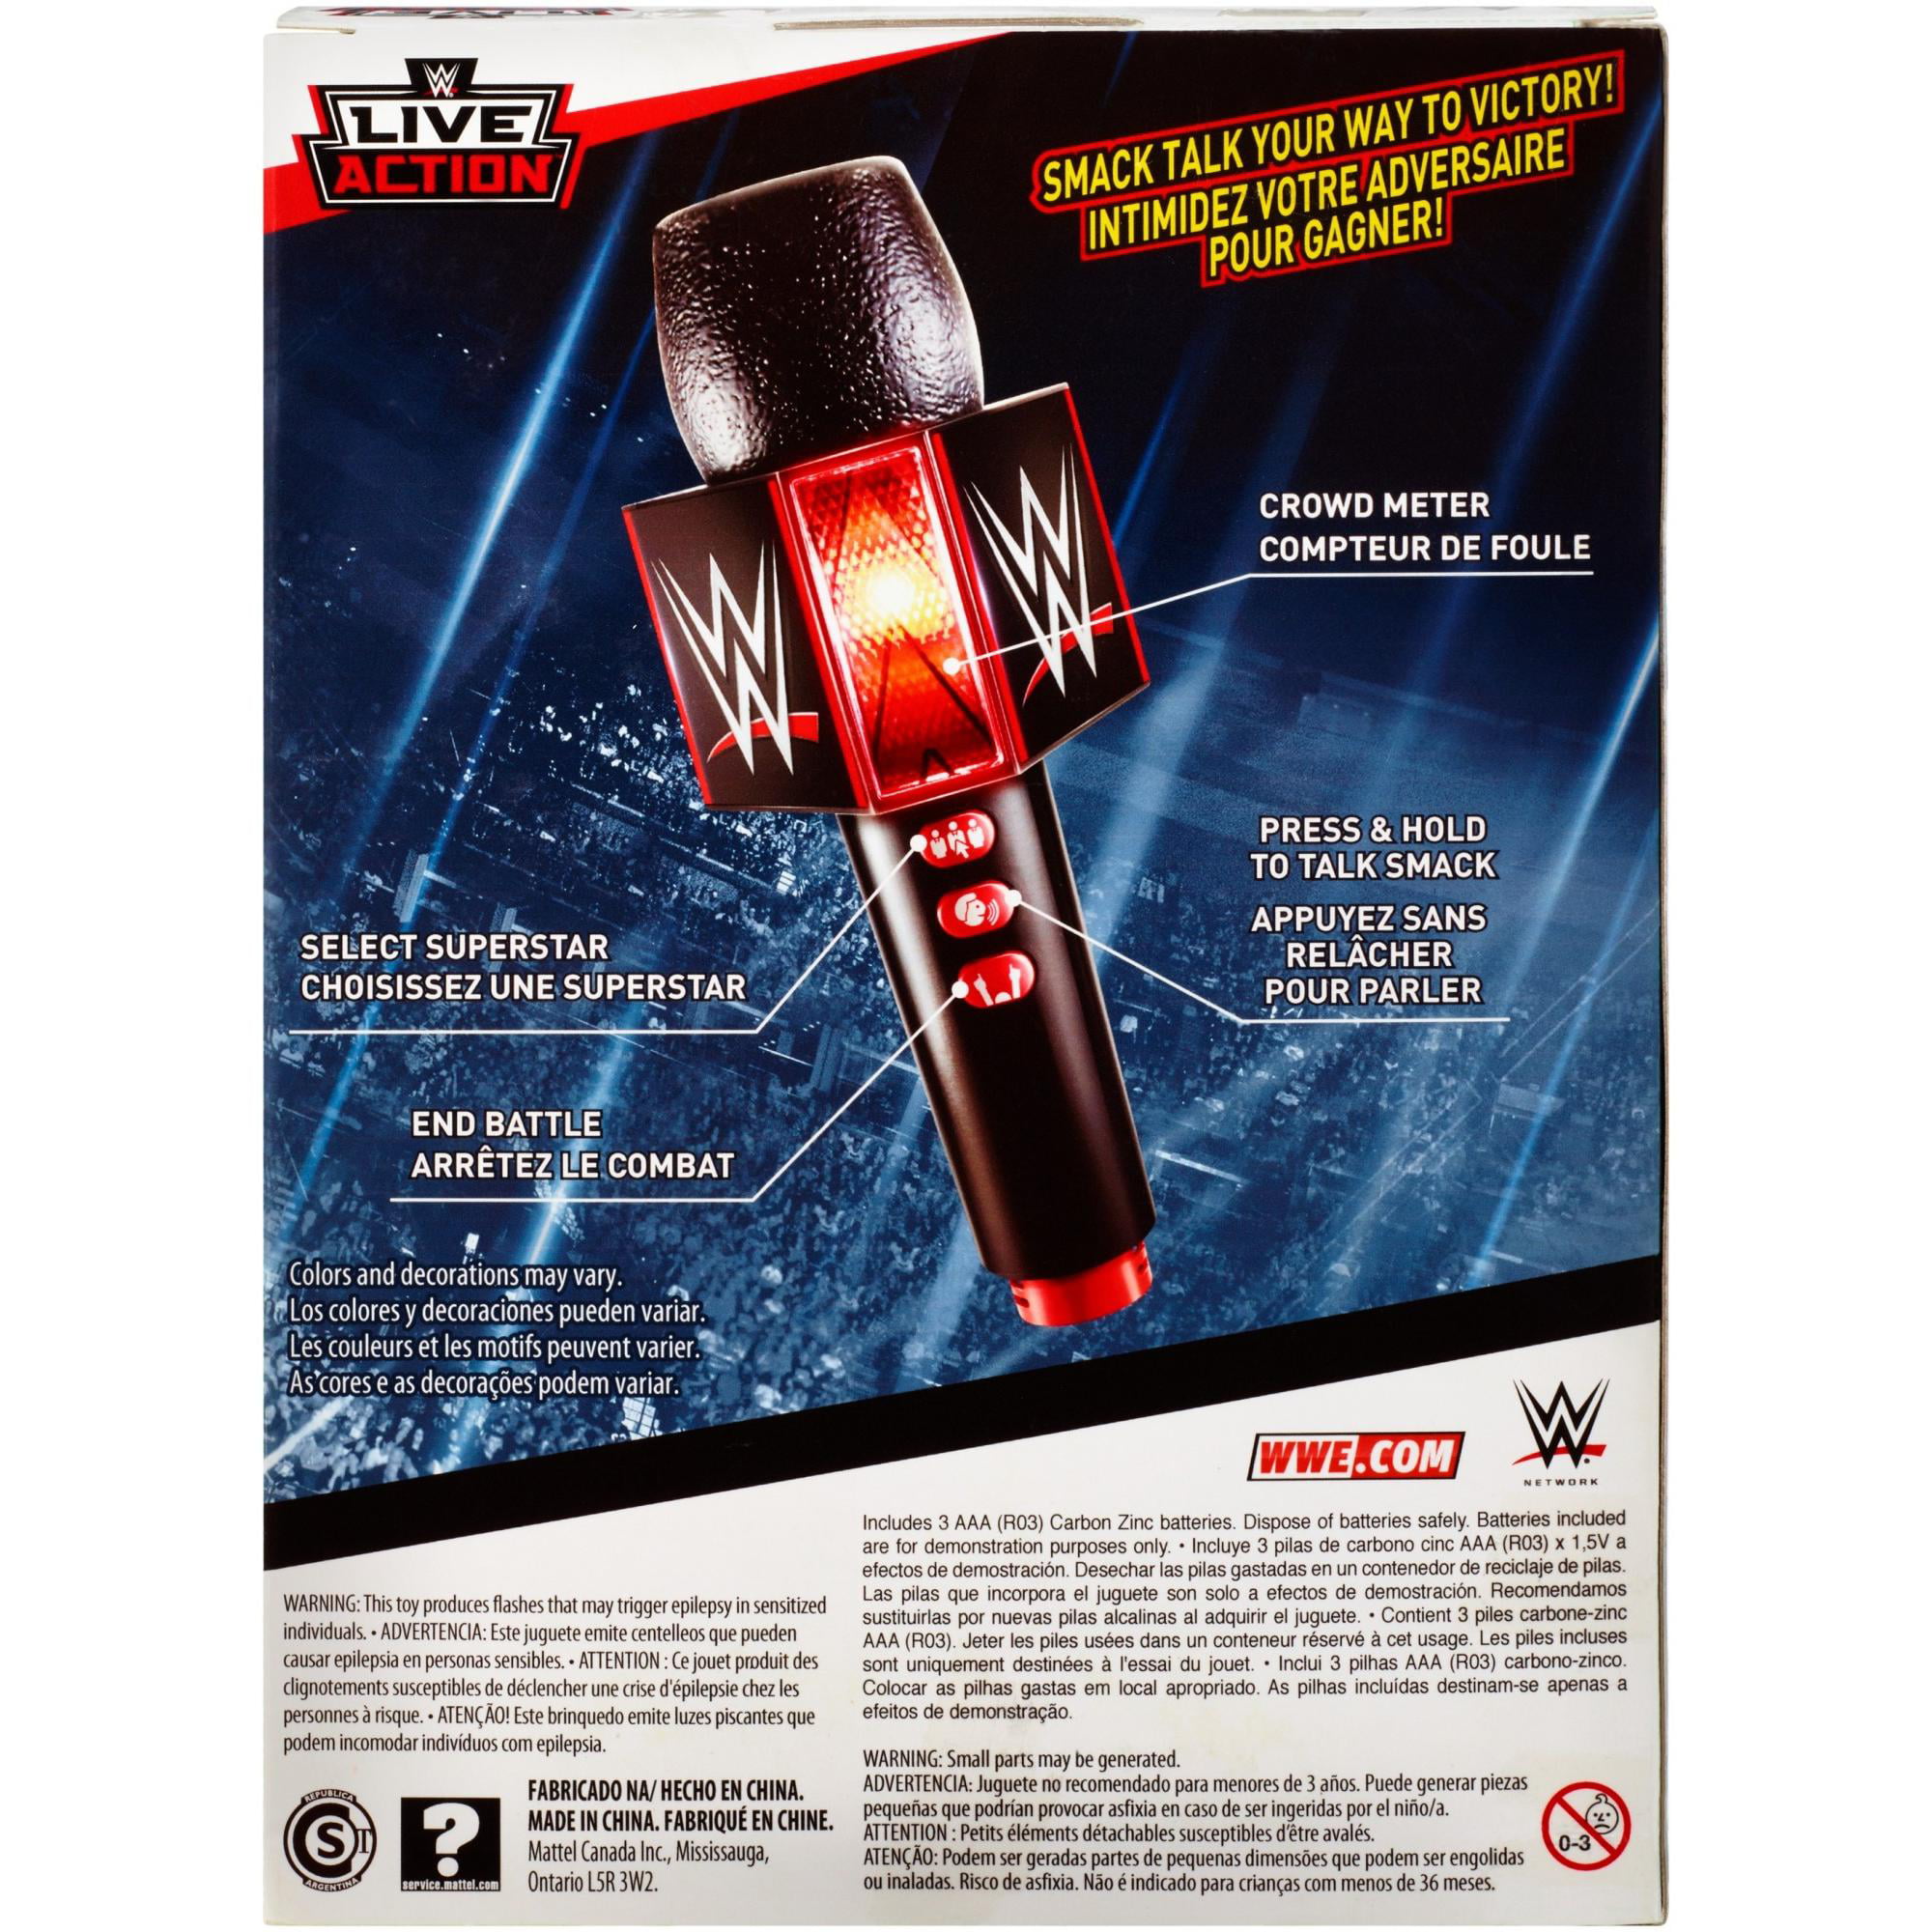 WWE Wrestling Live Action Battle Microphone The Rock John Cena Savage FXR16 